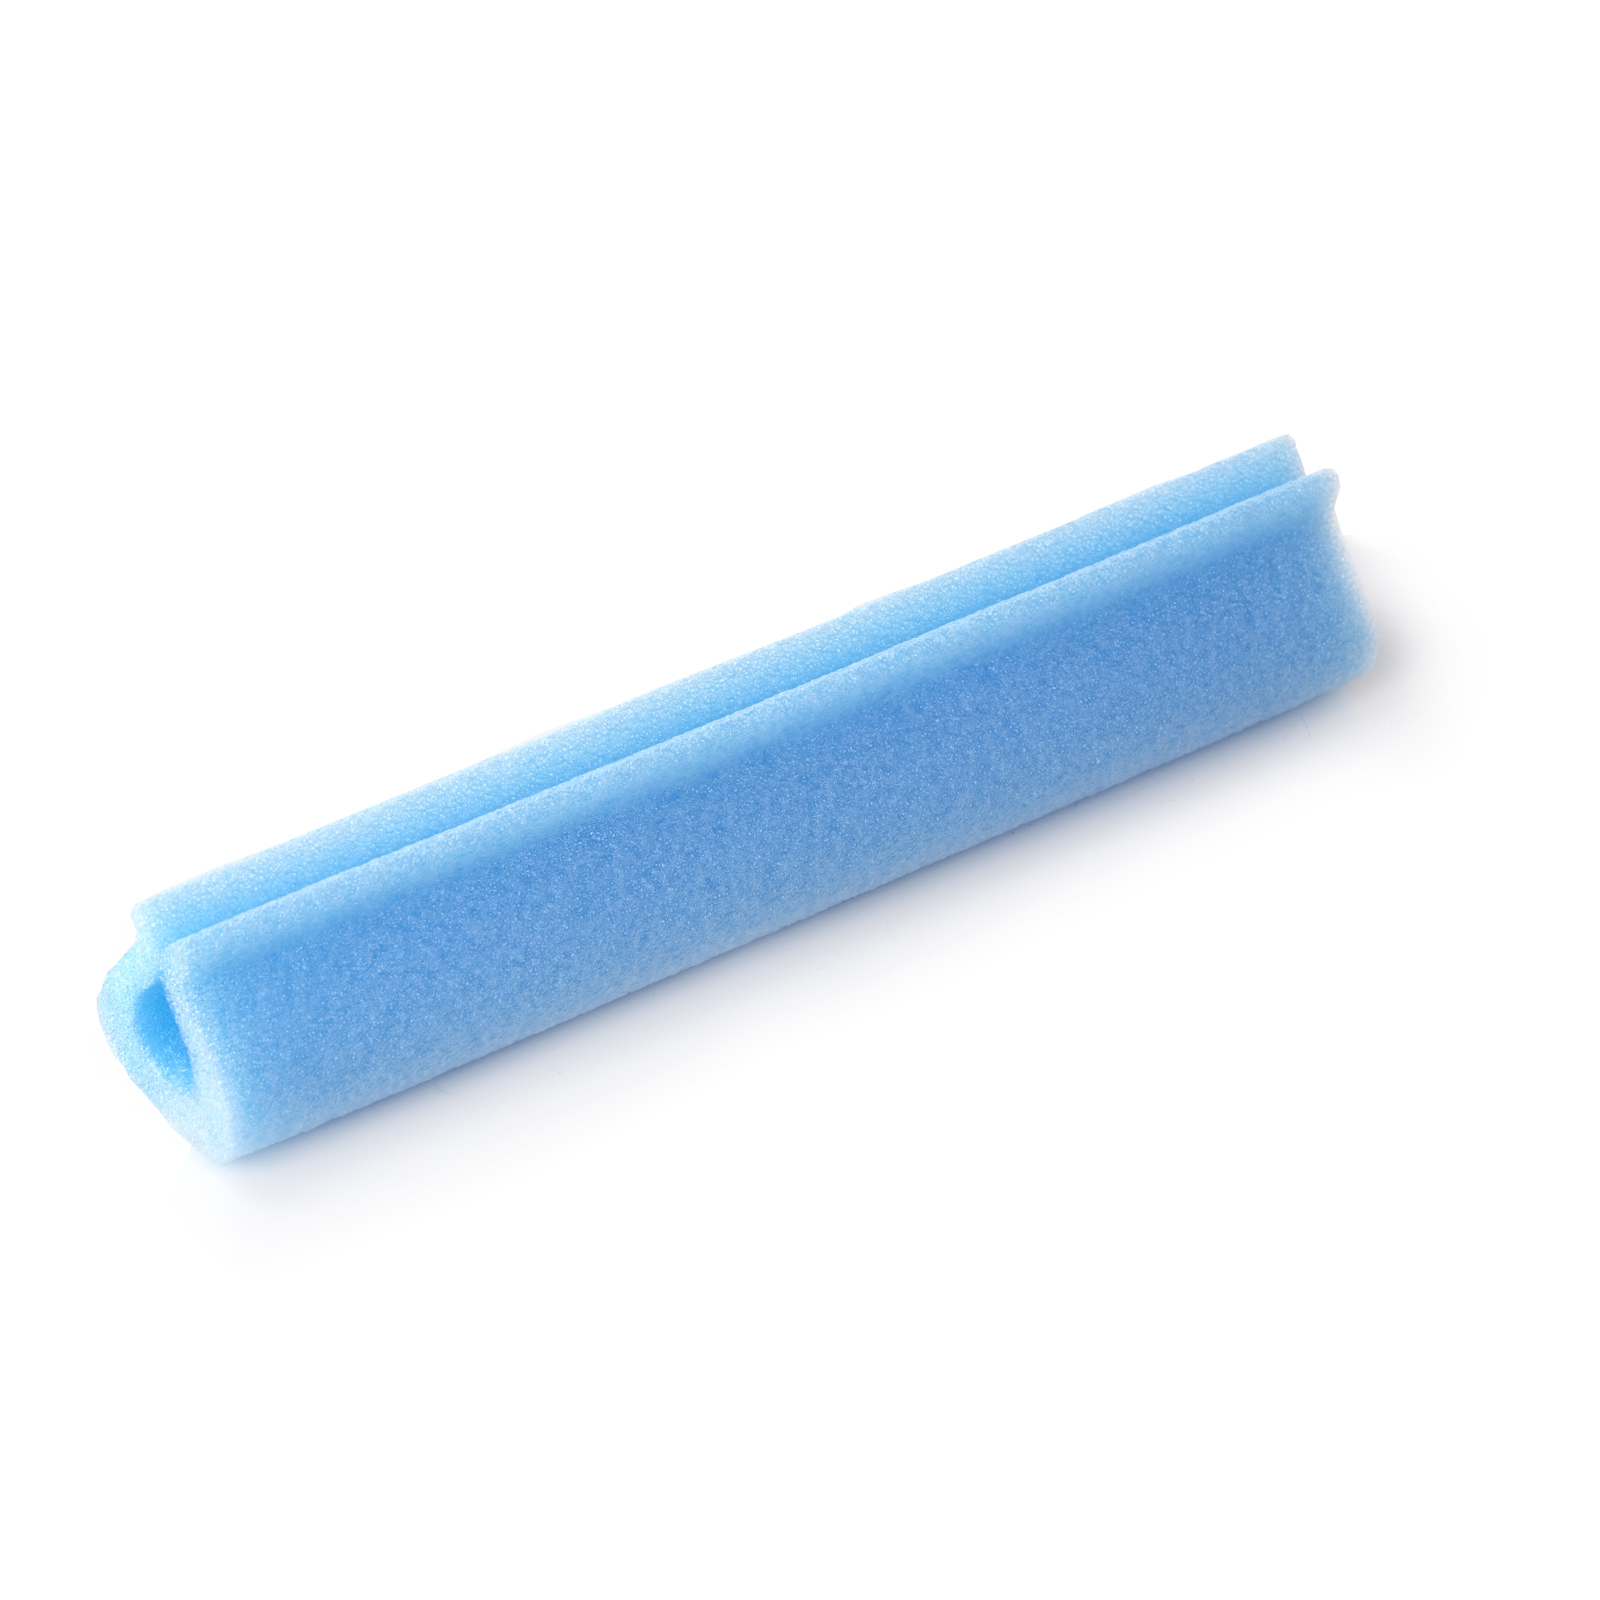 U-Kantenschutzprofile 5-15 mm aus PE-LD Schaum - Farbe blau